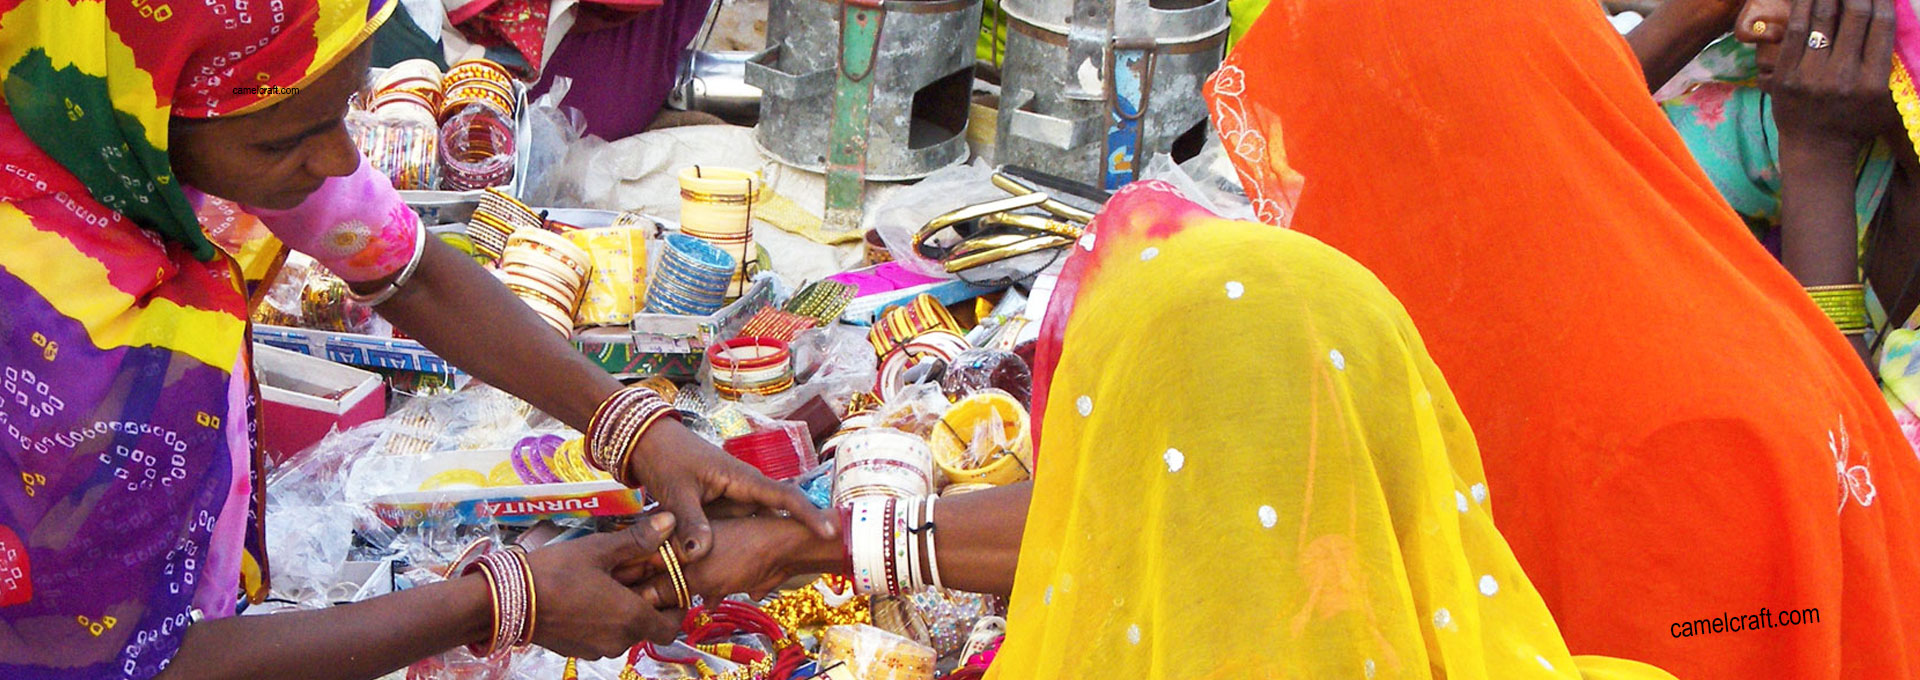 fairs and festivals of India